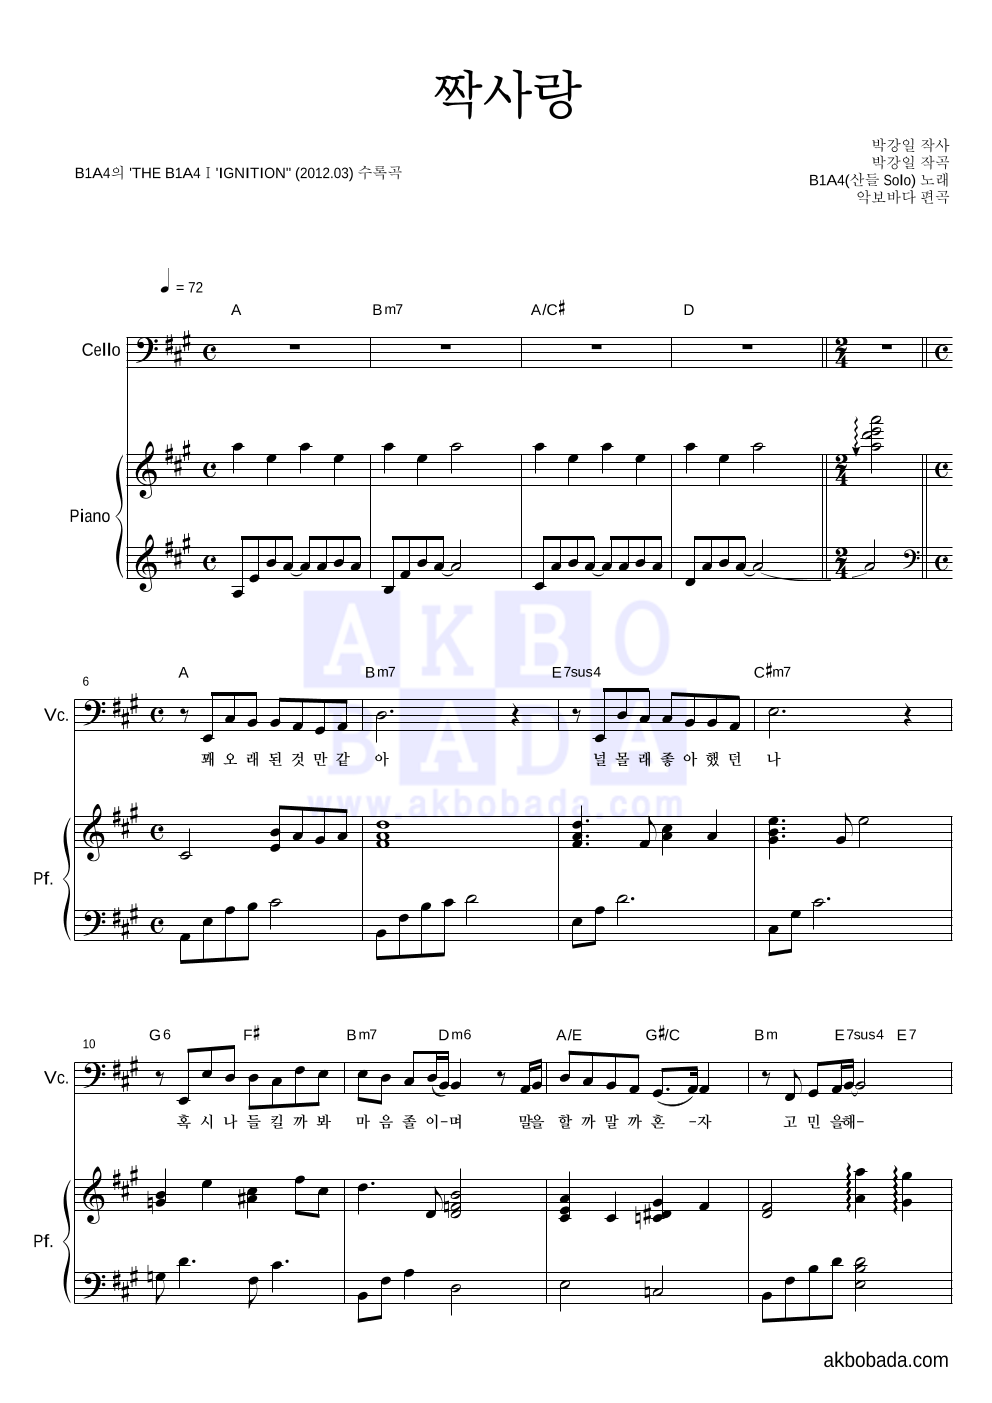 B1A4 - 짝사랑 (산들 Solo) 첼로&피아노 악보 